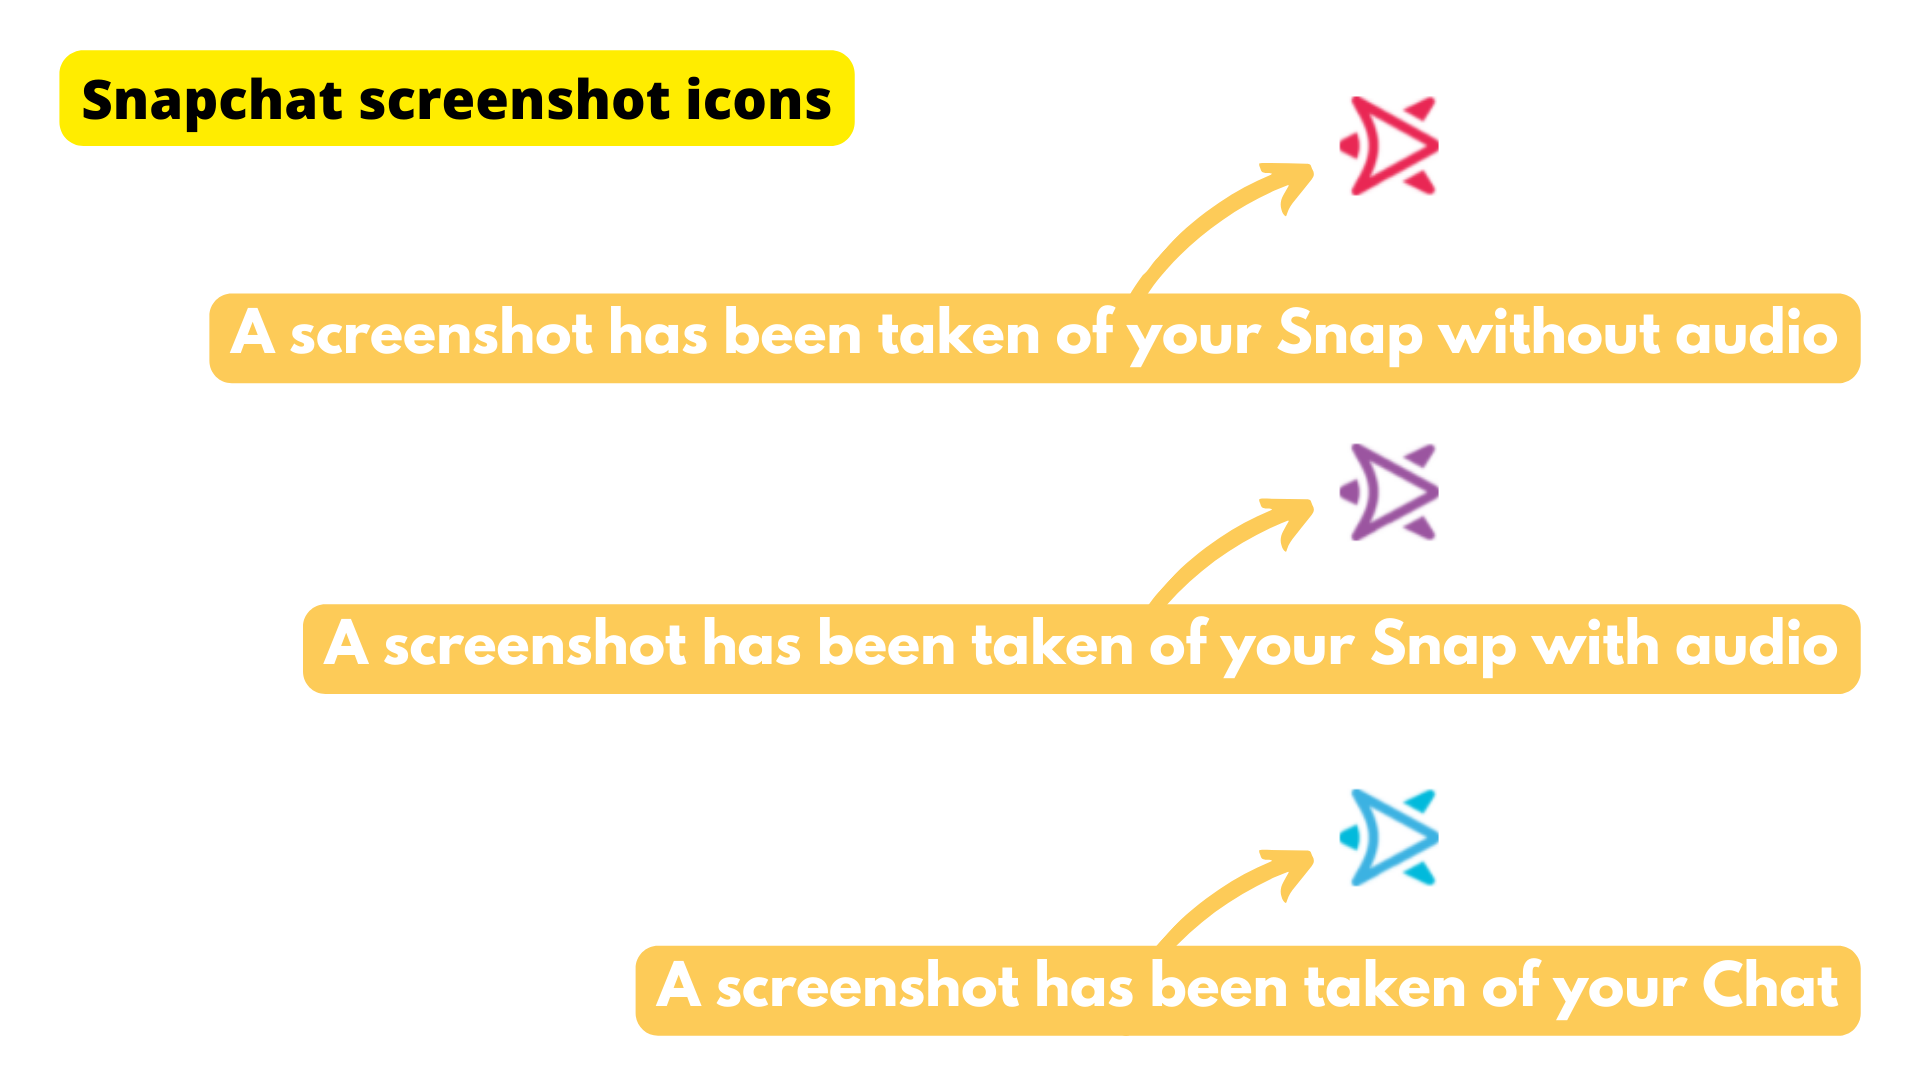 snapchat screenshot icons meaning